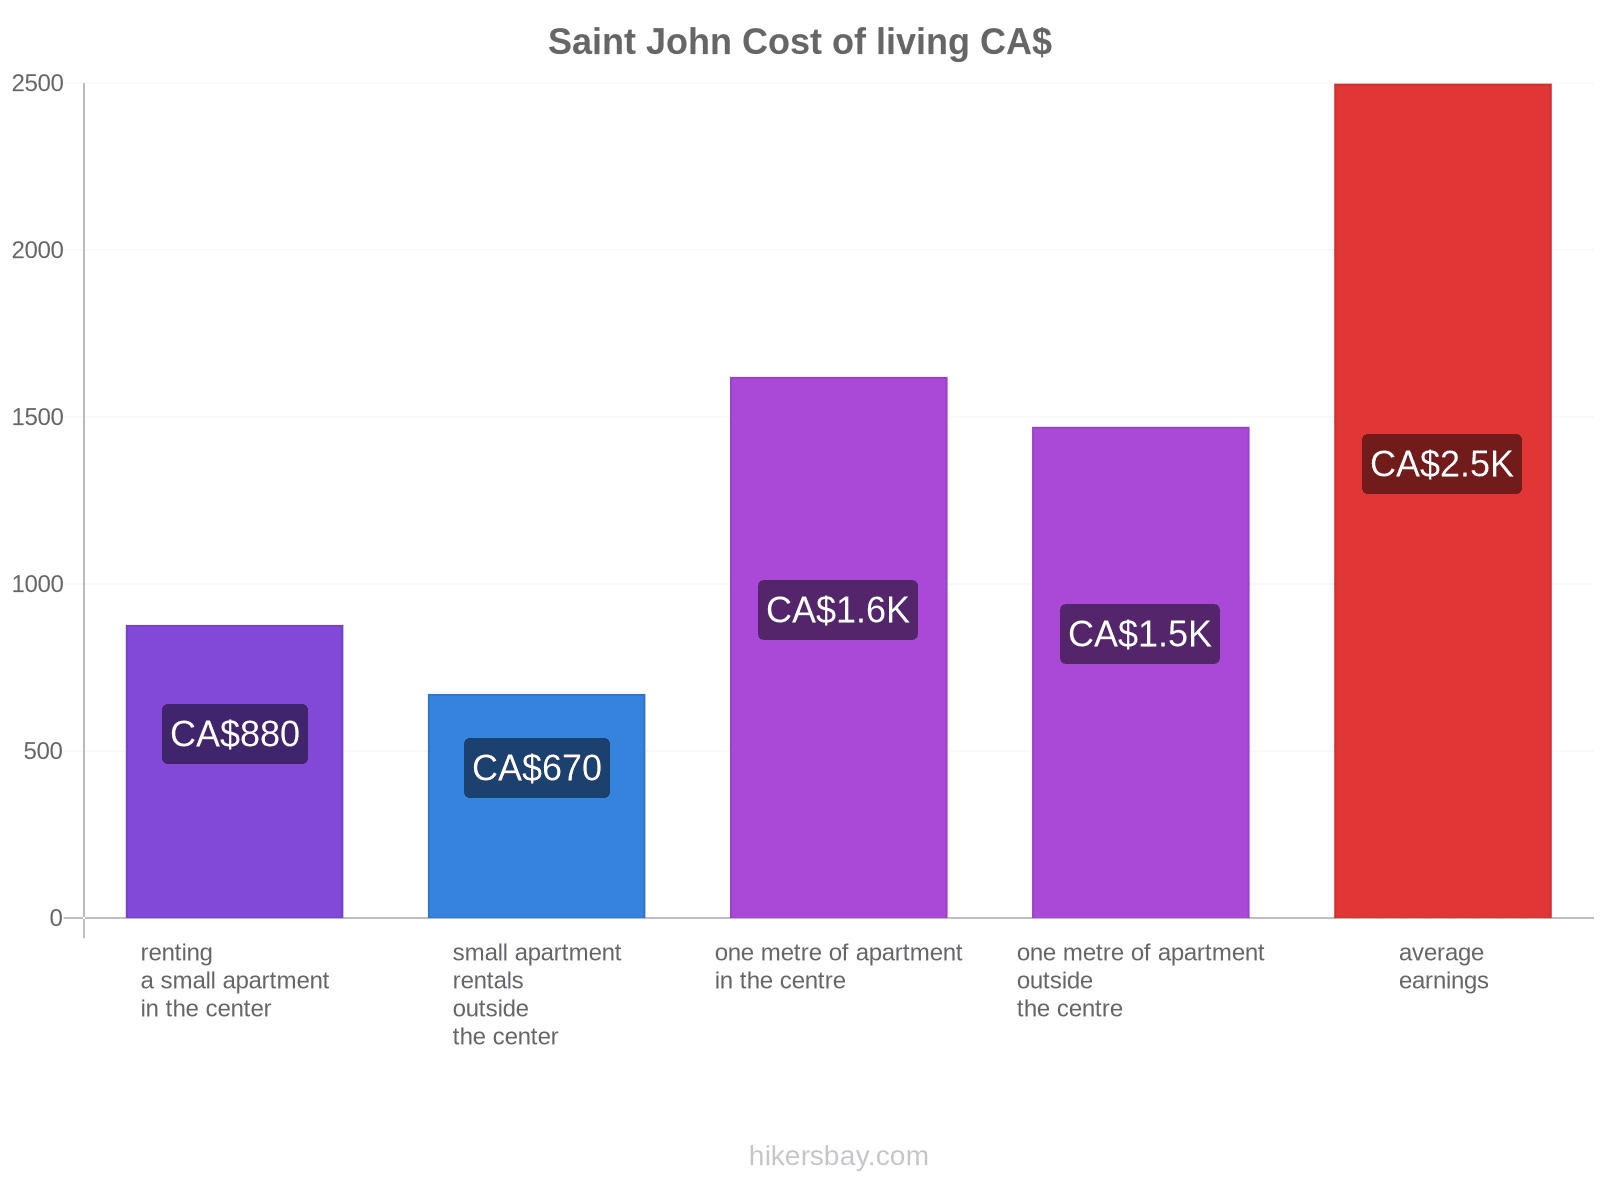 Saint John cost of living hikersbay.com